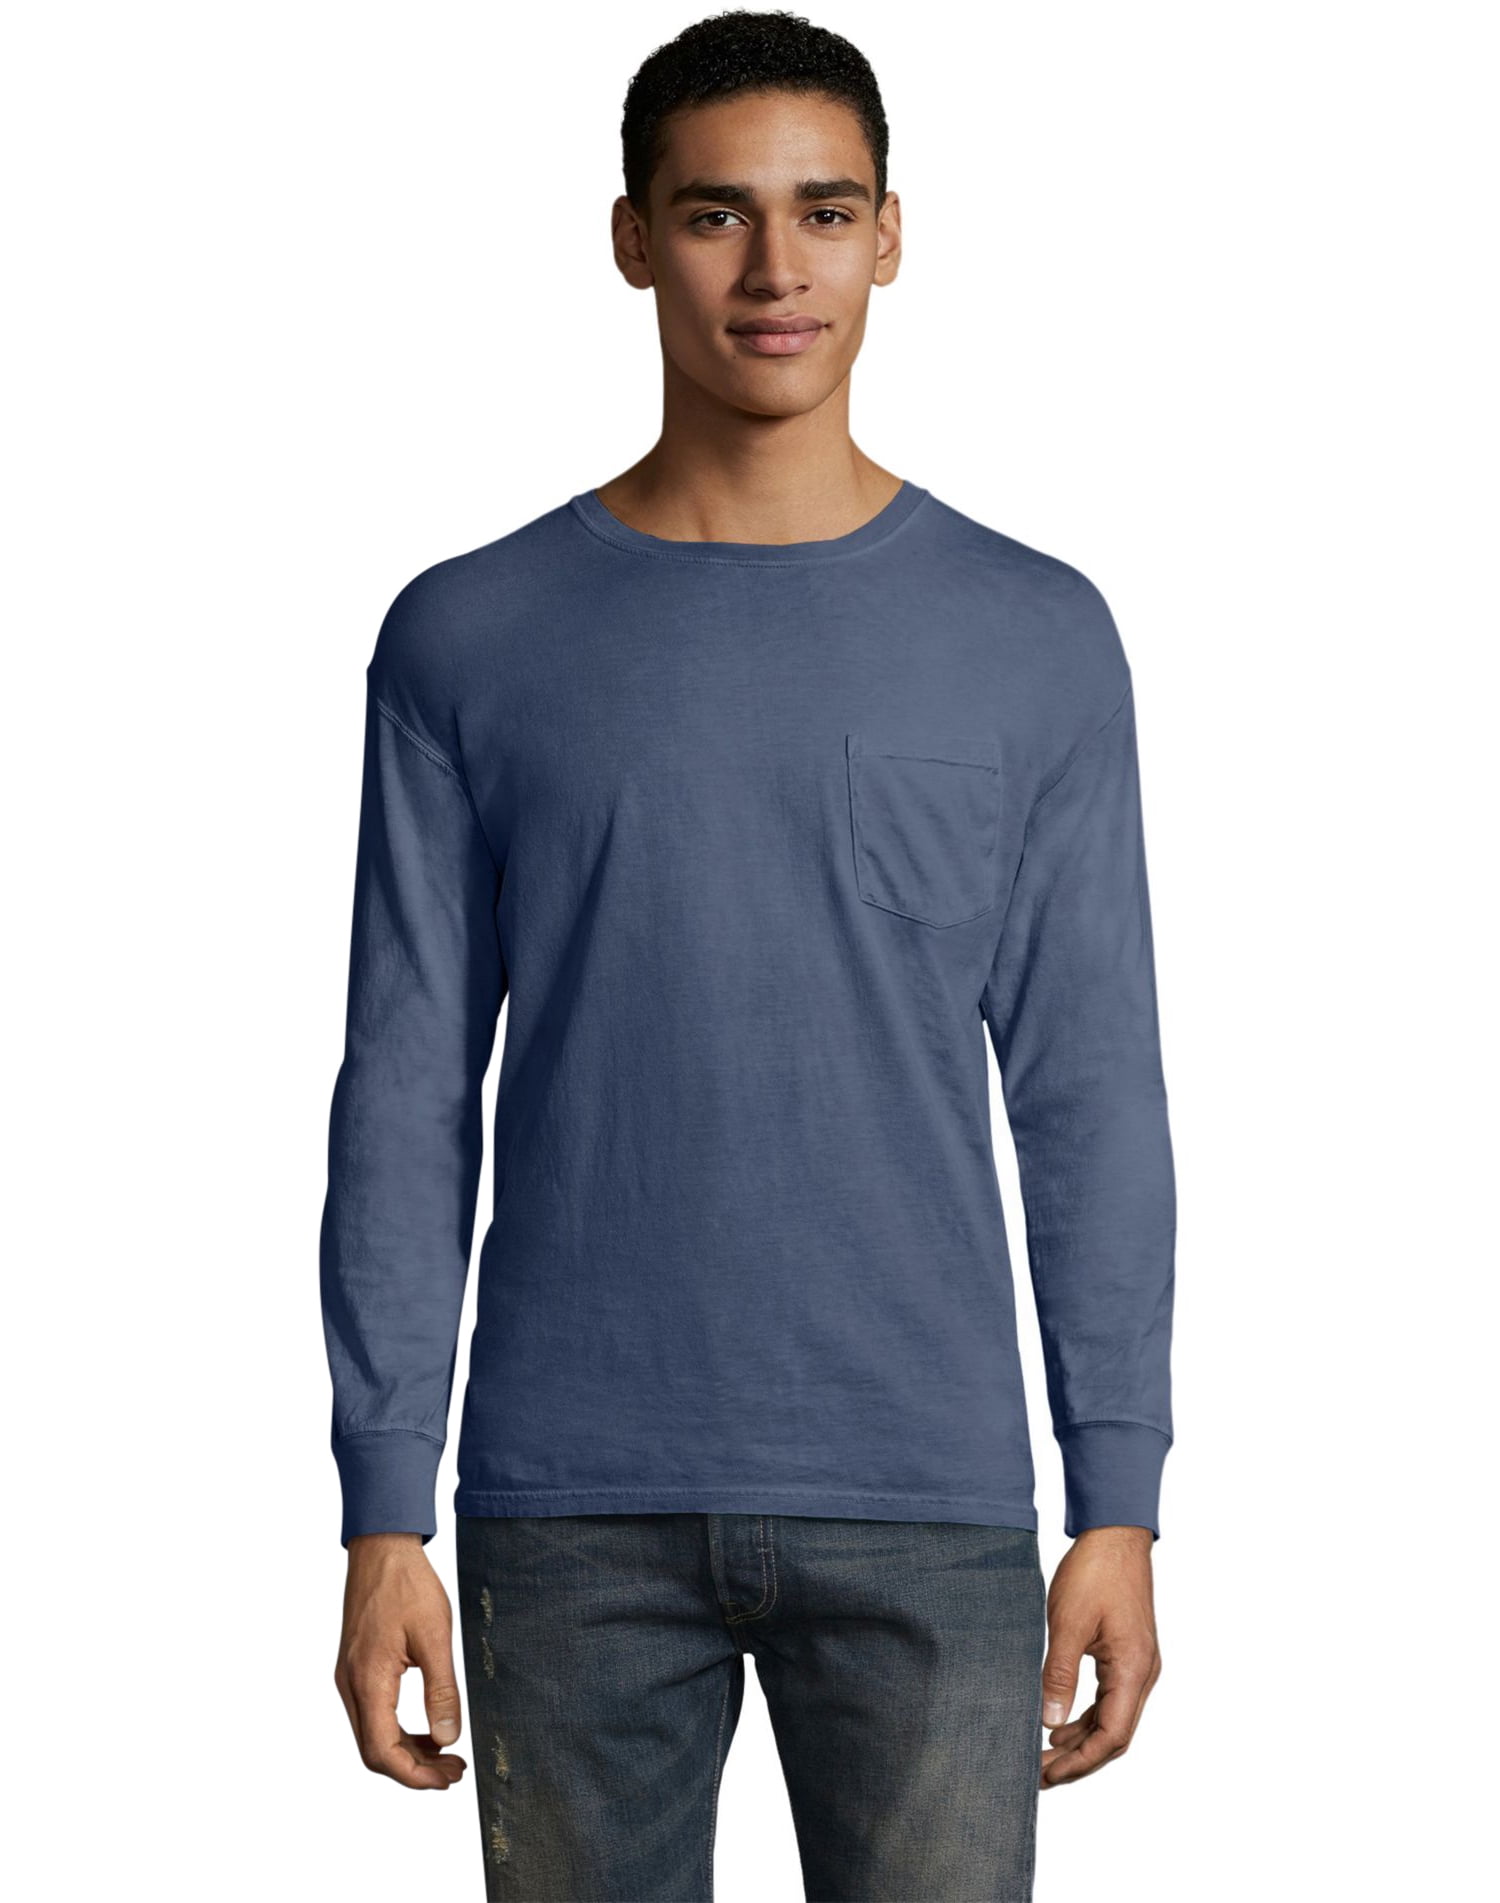 ComfortWash - Hanes Mens ComfortWash Garment Dyed Long Sleeve Pocket ...